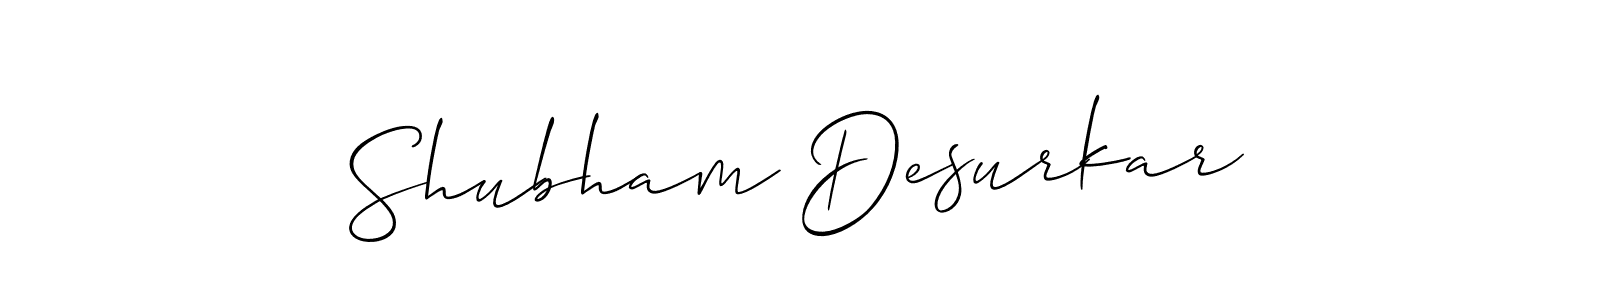 How to make Shubham Desurkar signature? Allison_Script is a professional autograph style. Create handwritten signature for Shubham Desurkar name. Shubham Desurkar signature style 2 images and pictures png